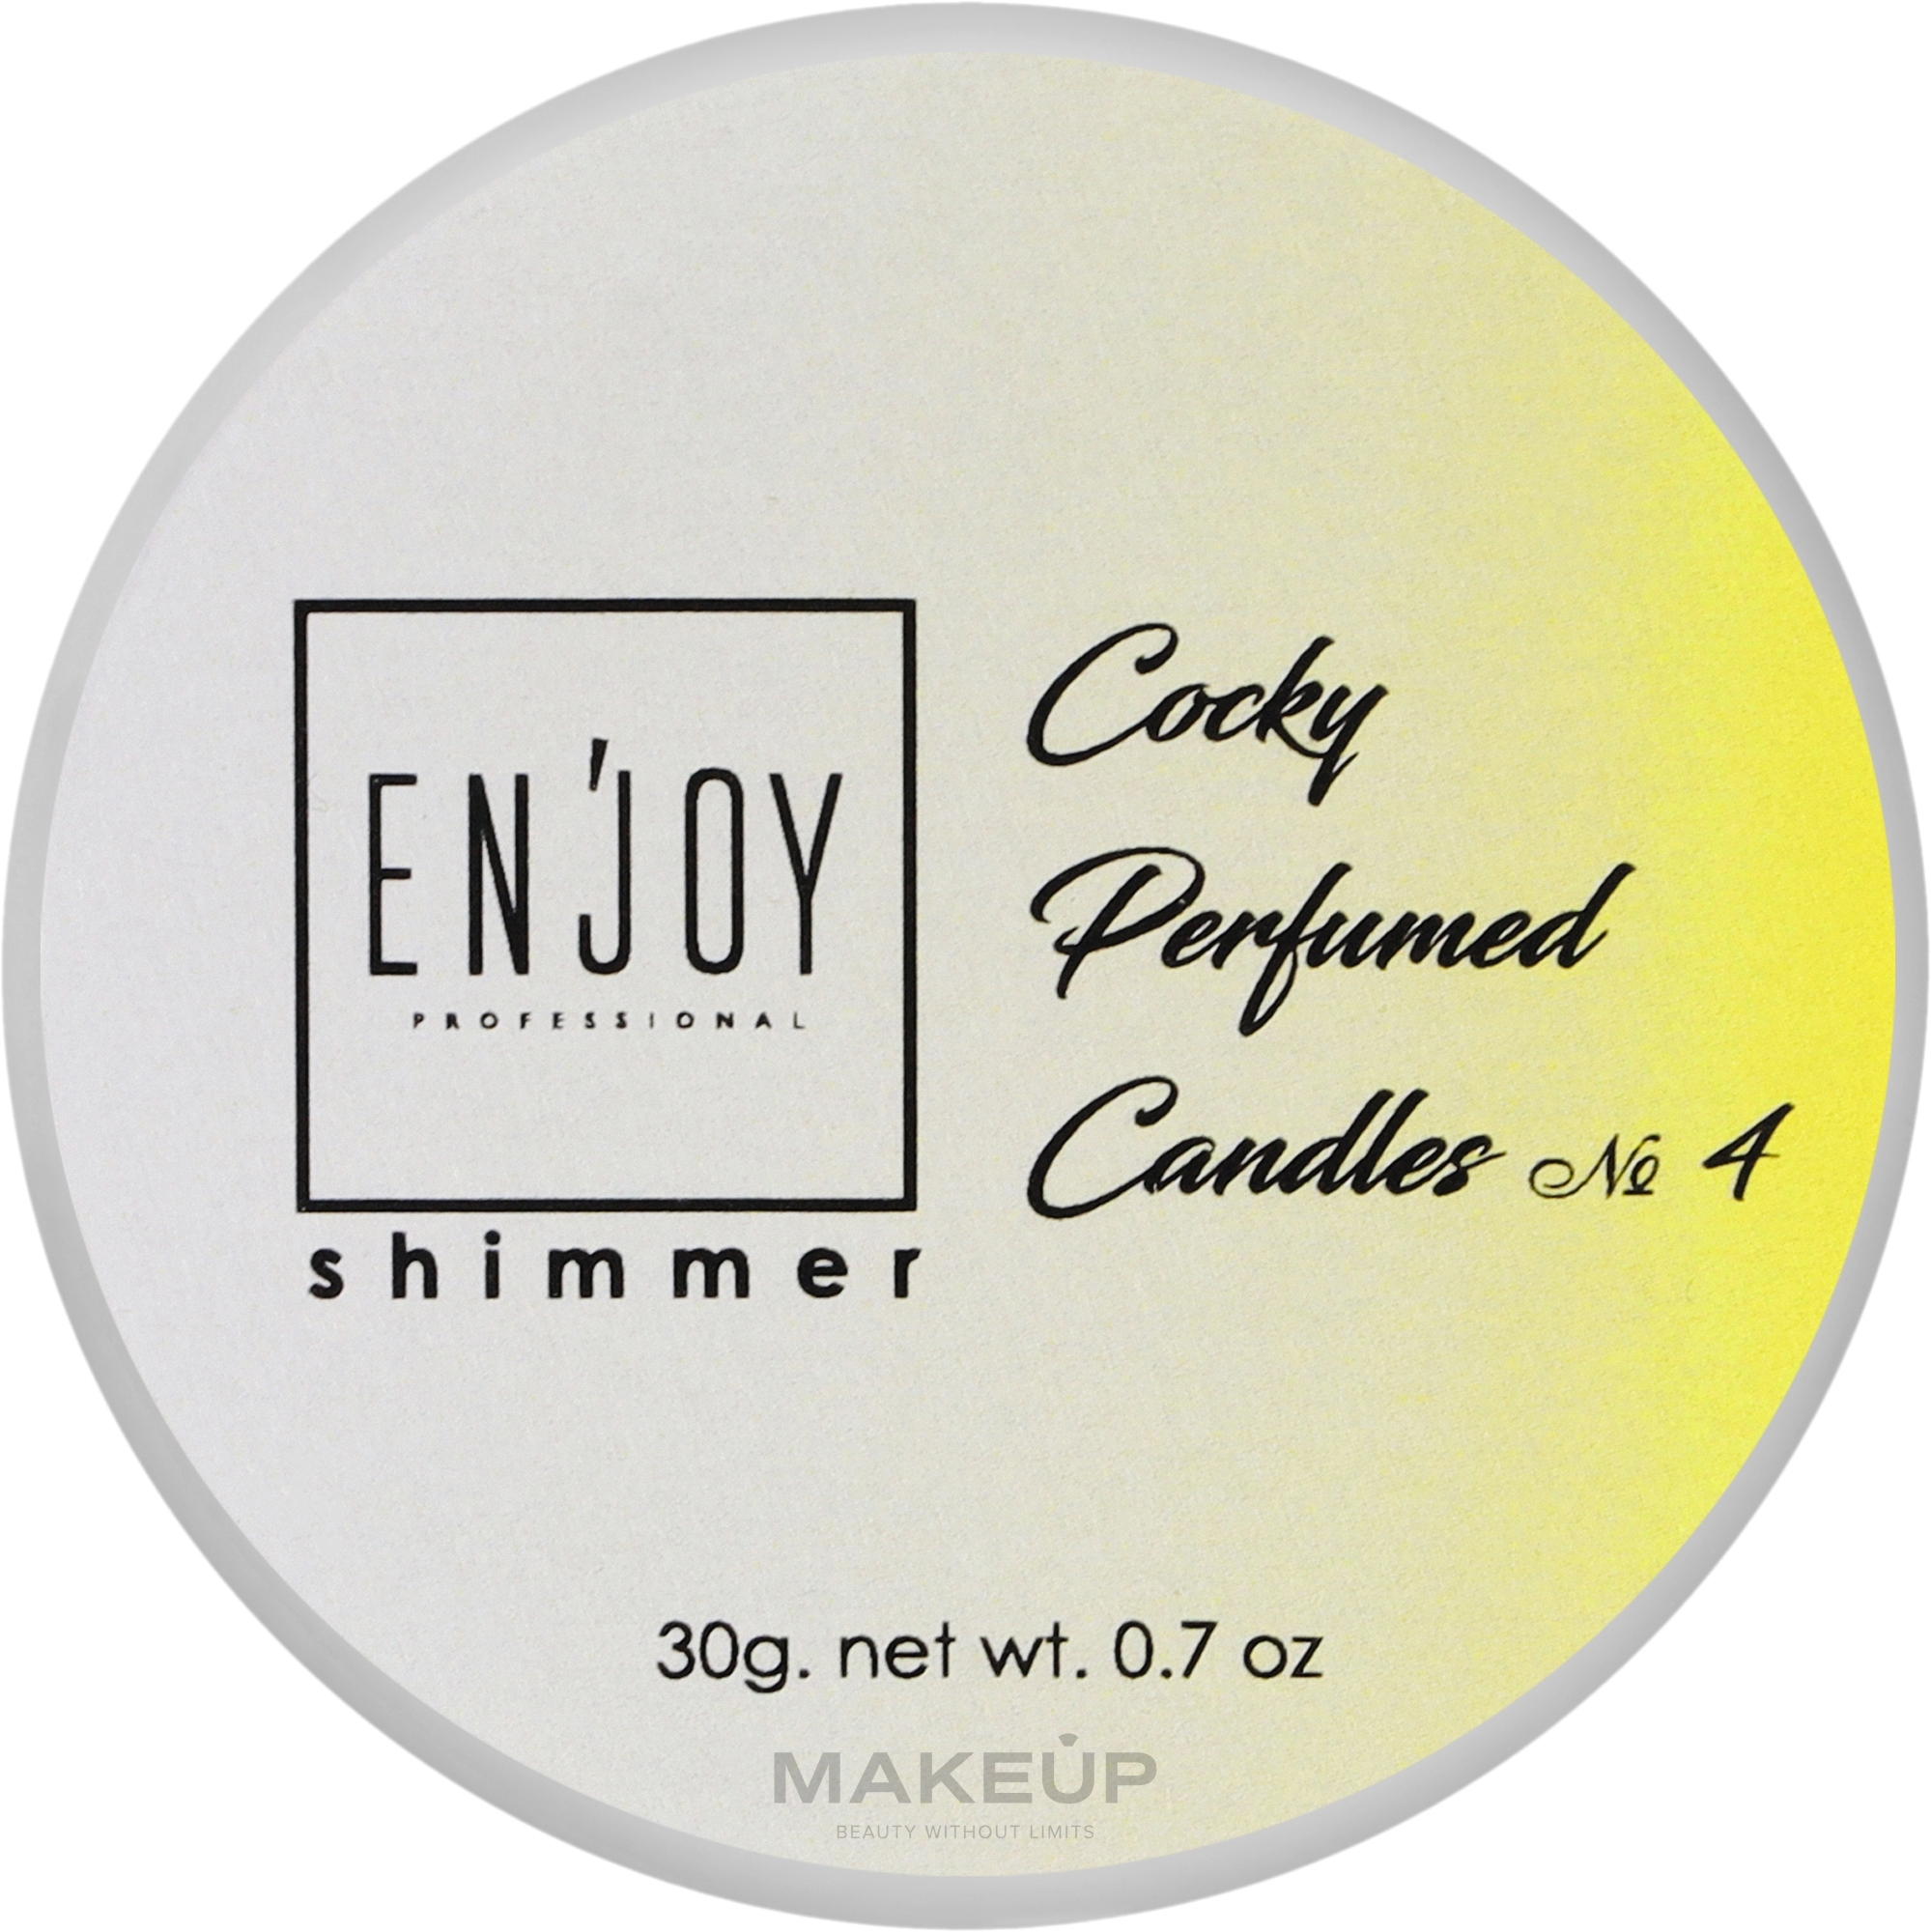 Парфюмированная массажная свеча - Enjoy Professional Shimmer Perfumed Candle Cocky #4 — фото 30g